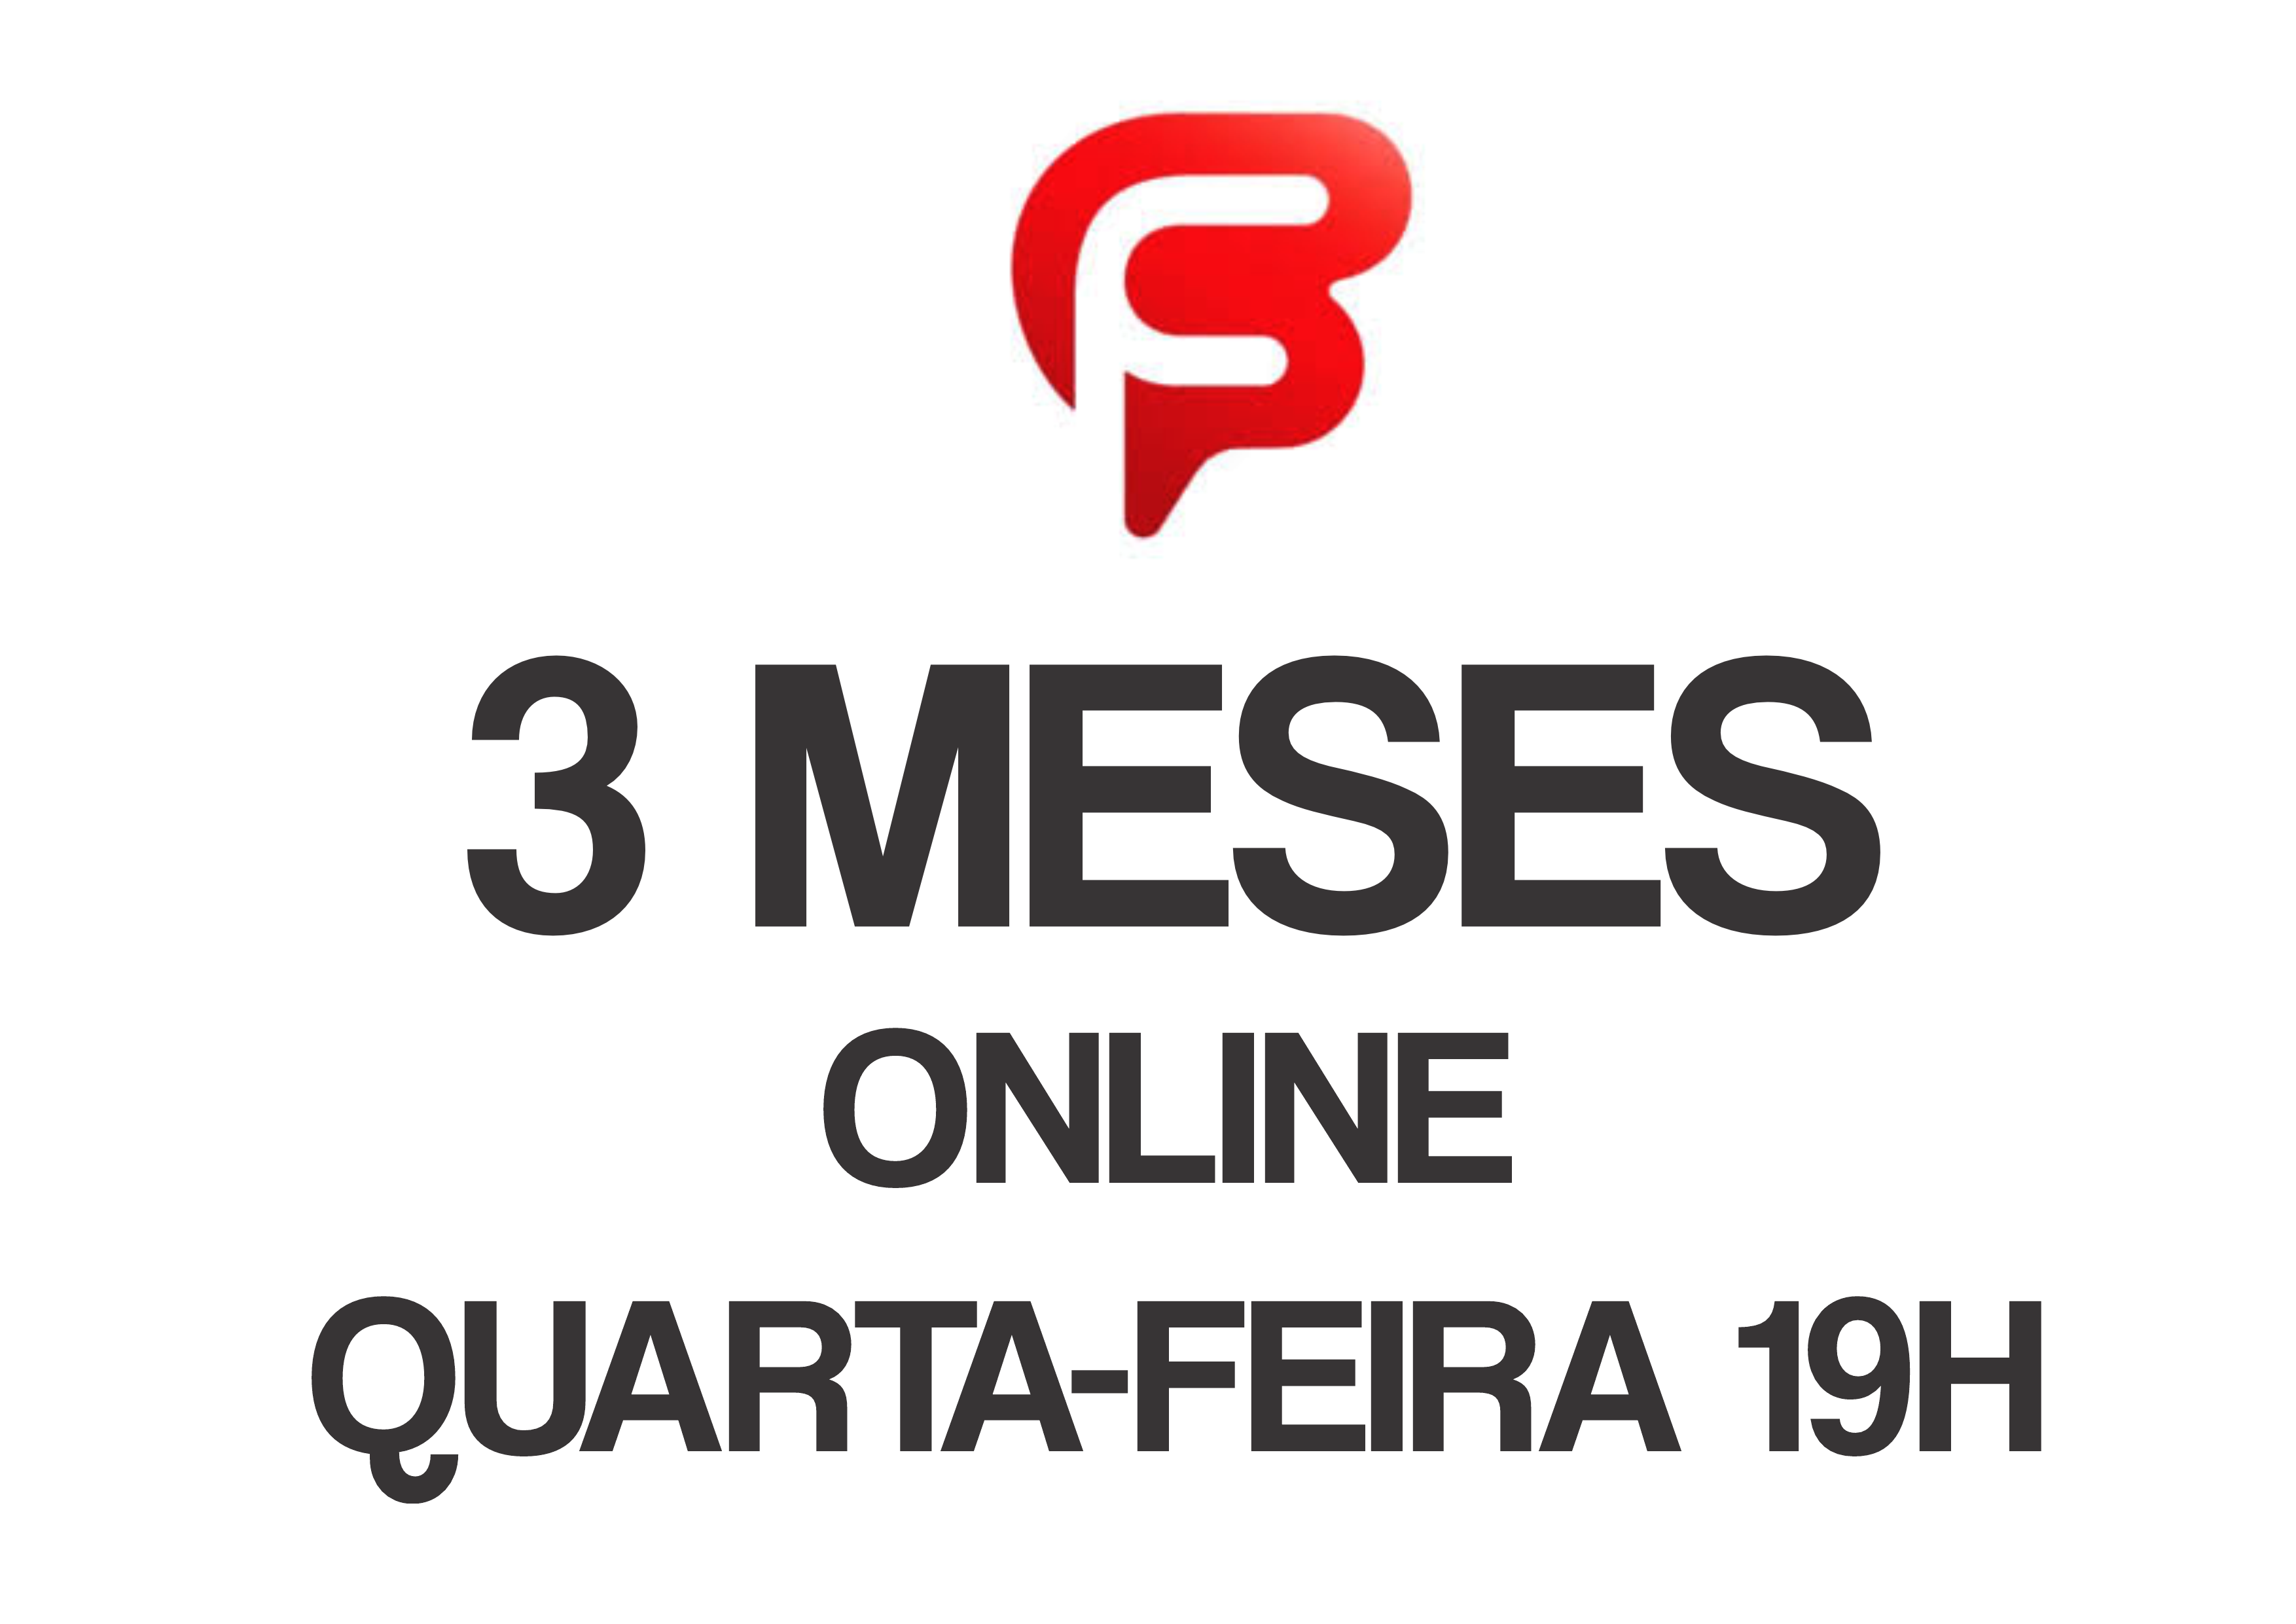 3 MESES ONLINE QUARTA 19h - Online